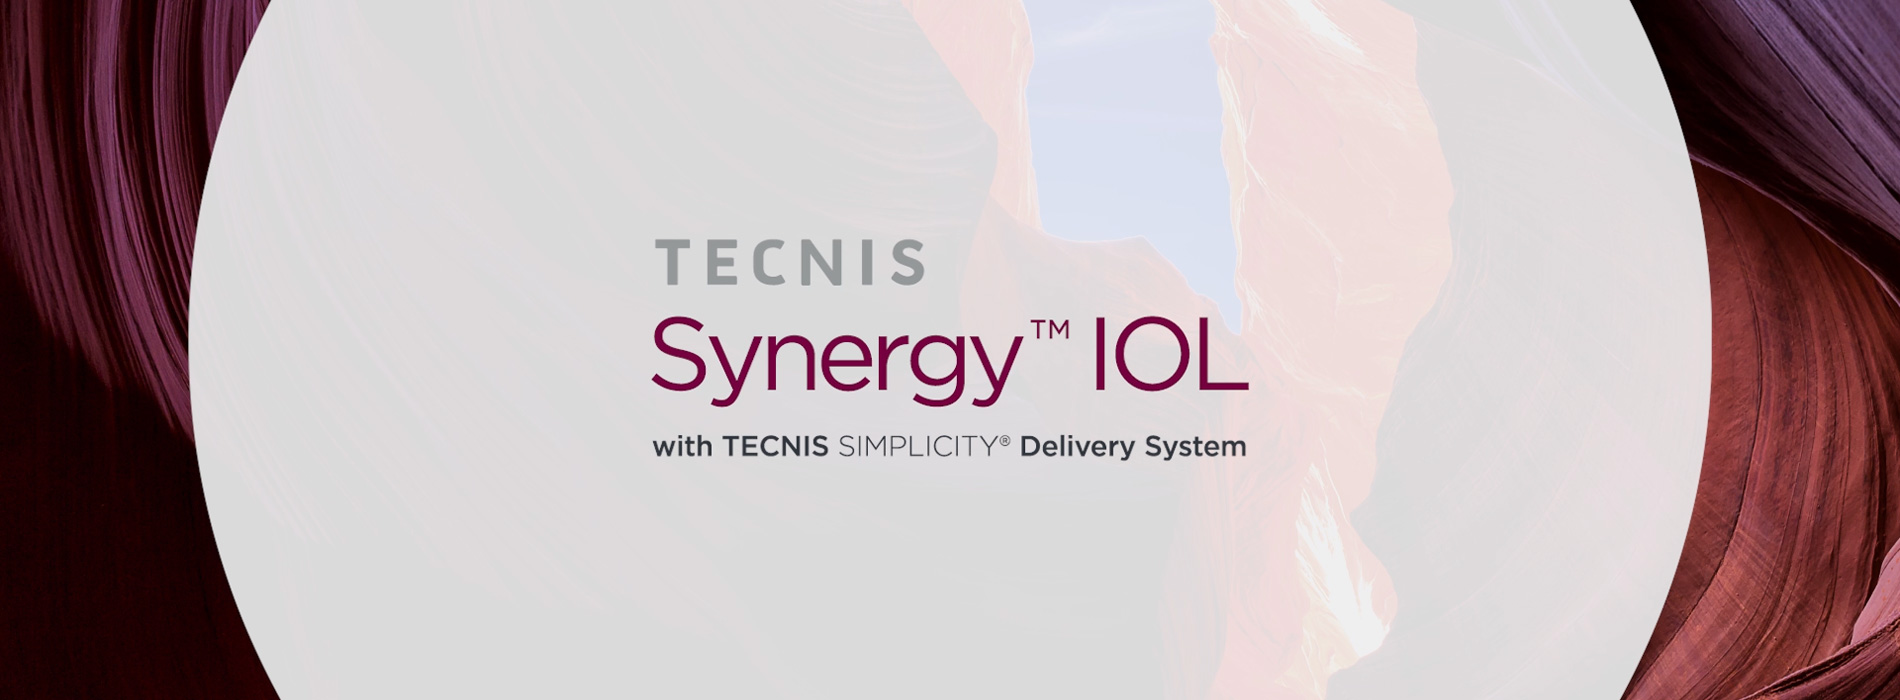 Johnson & Johnson Vision announces availability of TECNIS Synergy and TECNIS Synergy Toric II IOLs